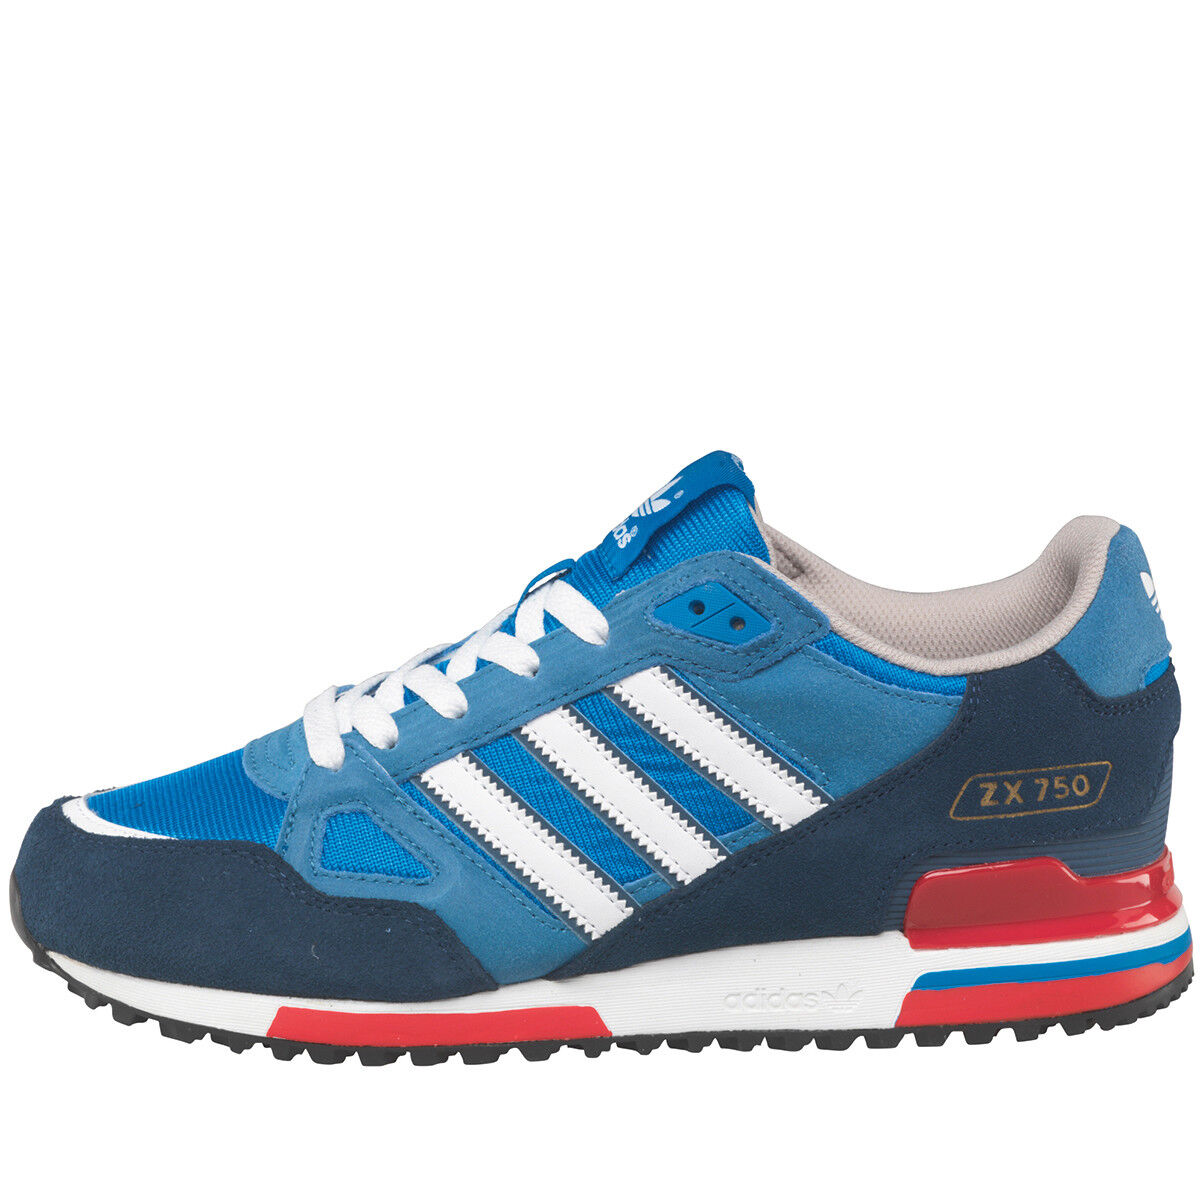 Adidas Original Men's Zx 750 Sneakers Bluebird/Blue/Navy/Red/White 